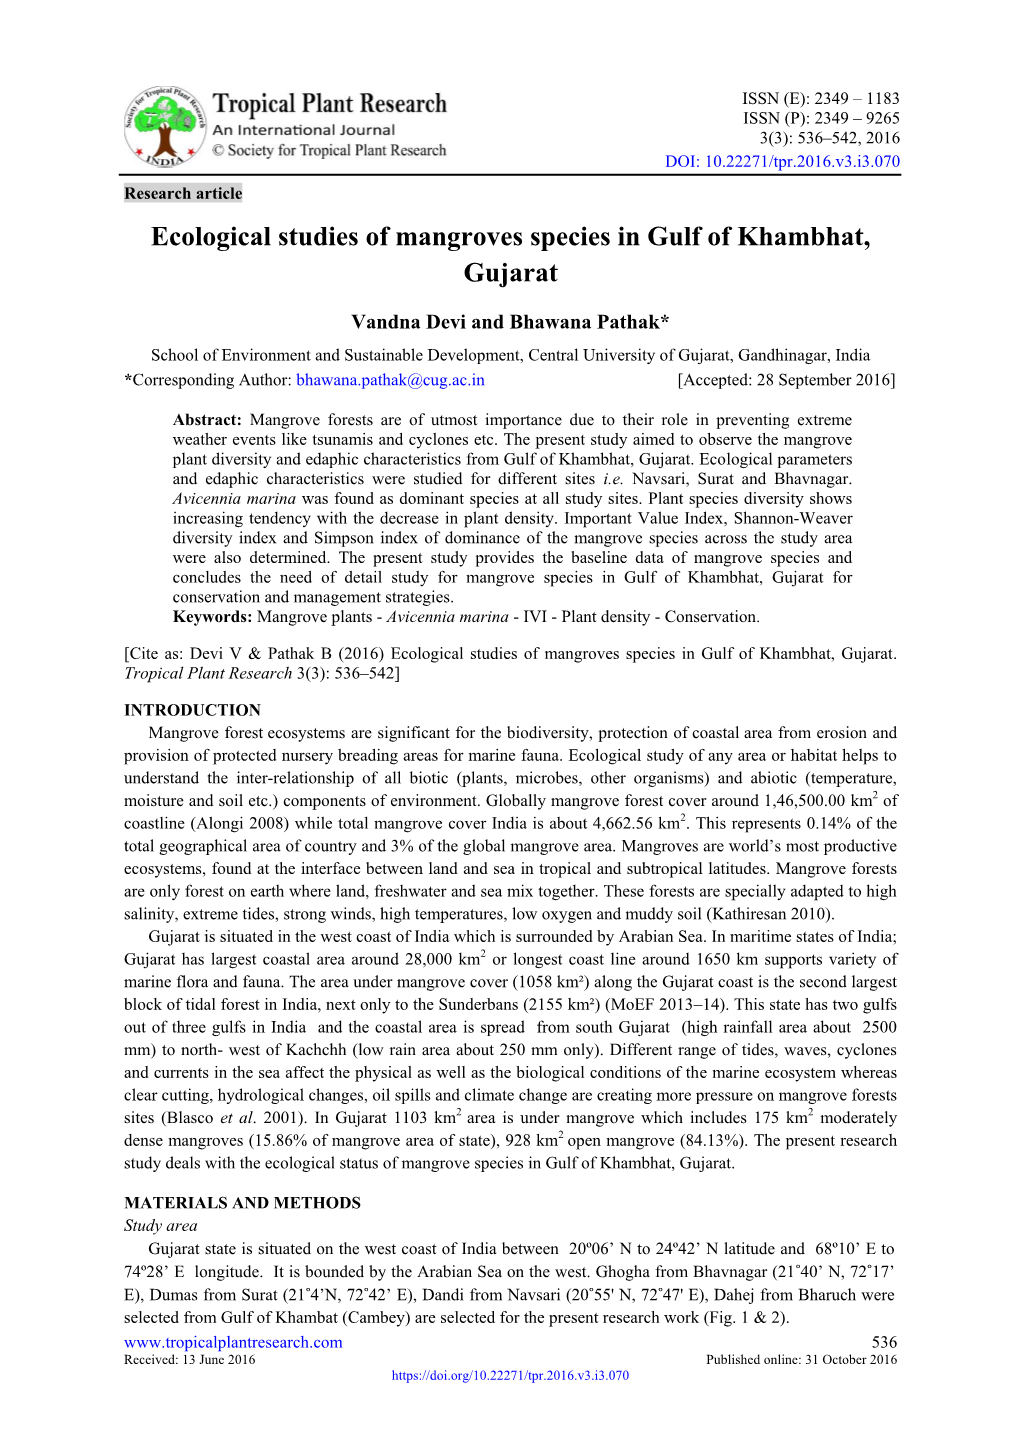 Ecological Studies of Mangroves Species in Gulf of Khambhat, Gujarat